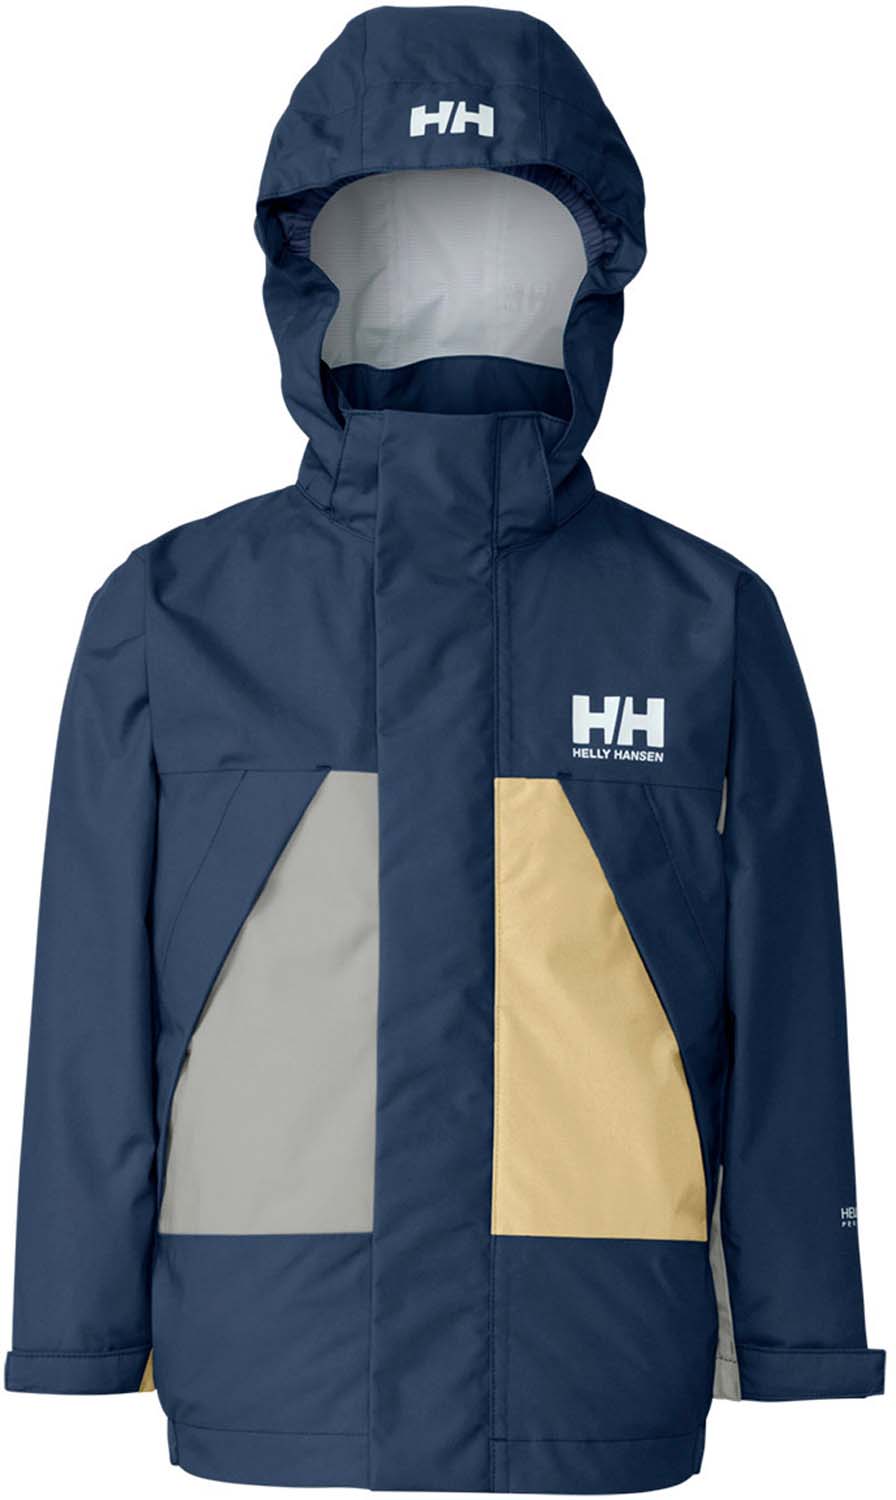  HELLY　HANSEN ヘリーハンセン アウトドア スカンザレインジャケット キッズ K Scandza Rain Jacket ジャケット 上着 アウター 防水 男の子 女の子 HJ12152